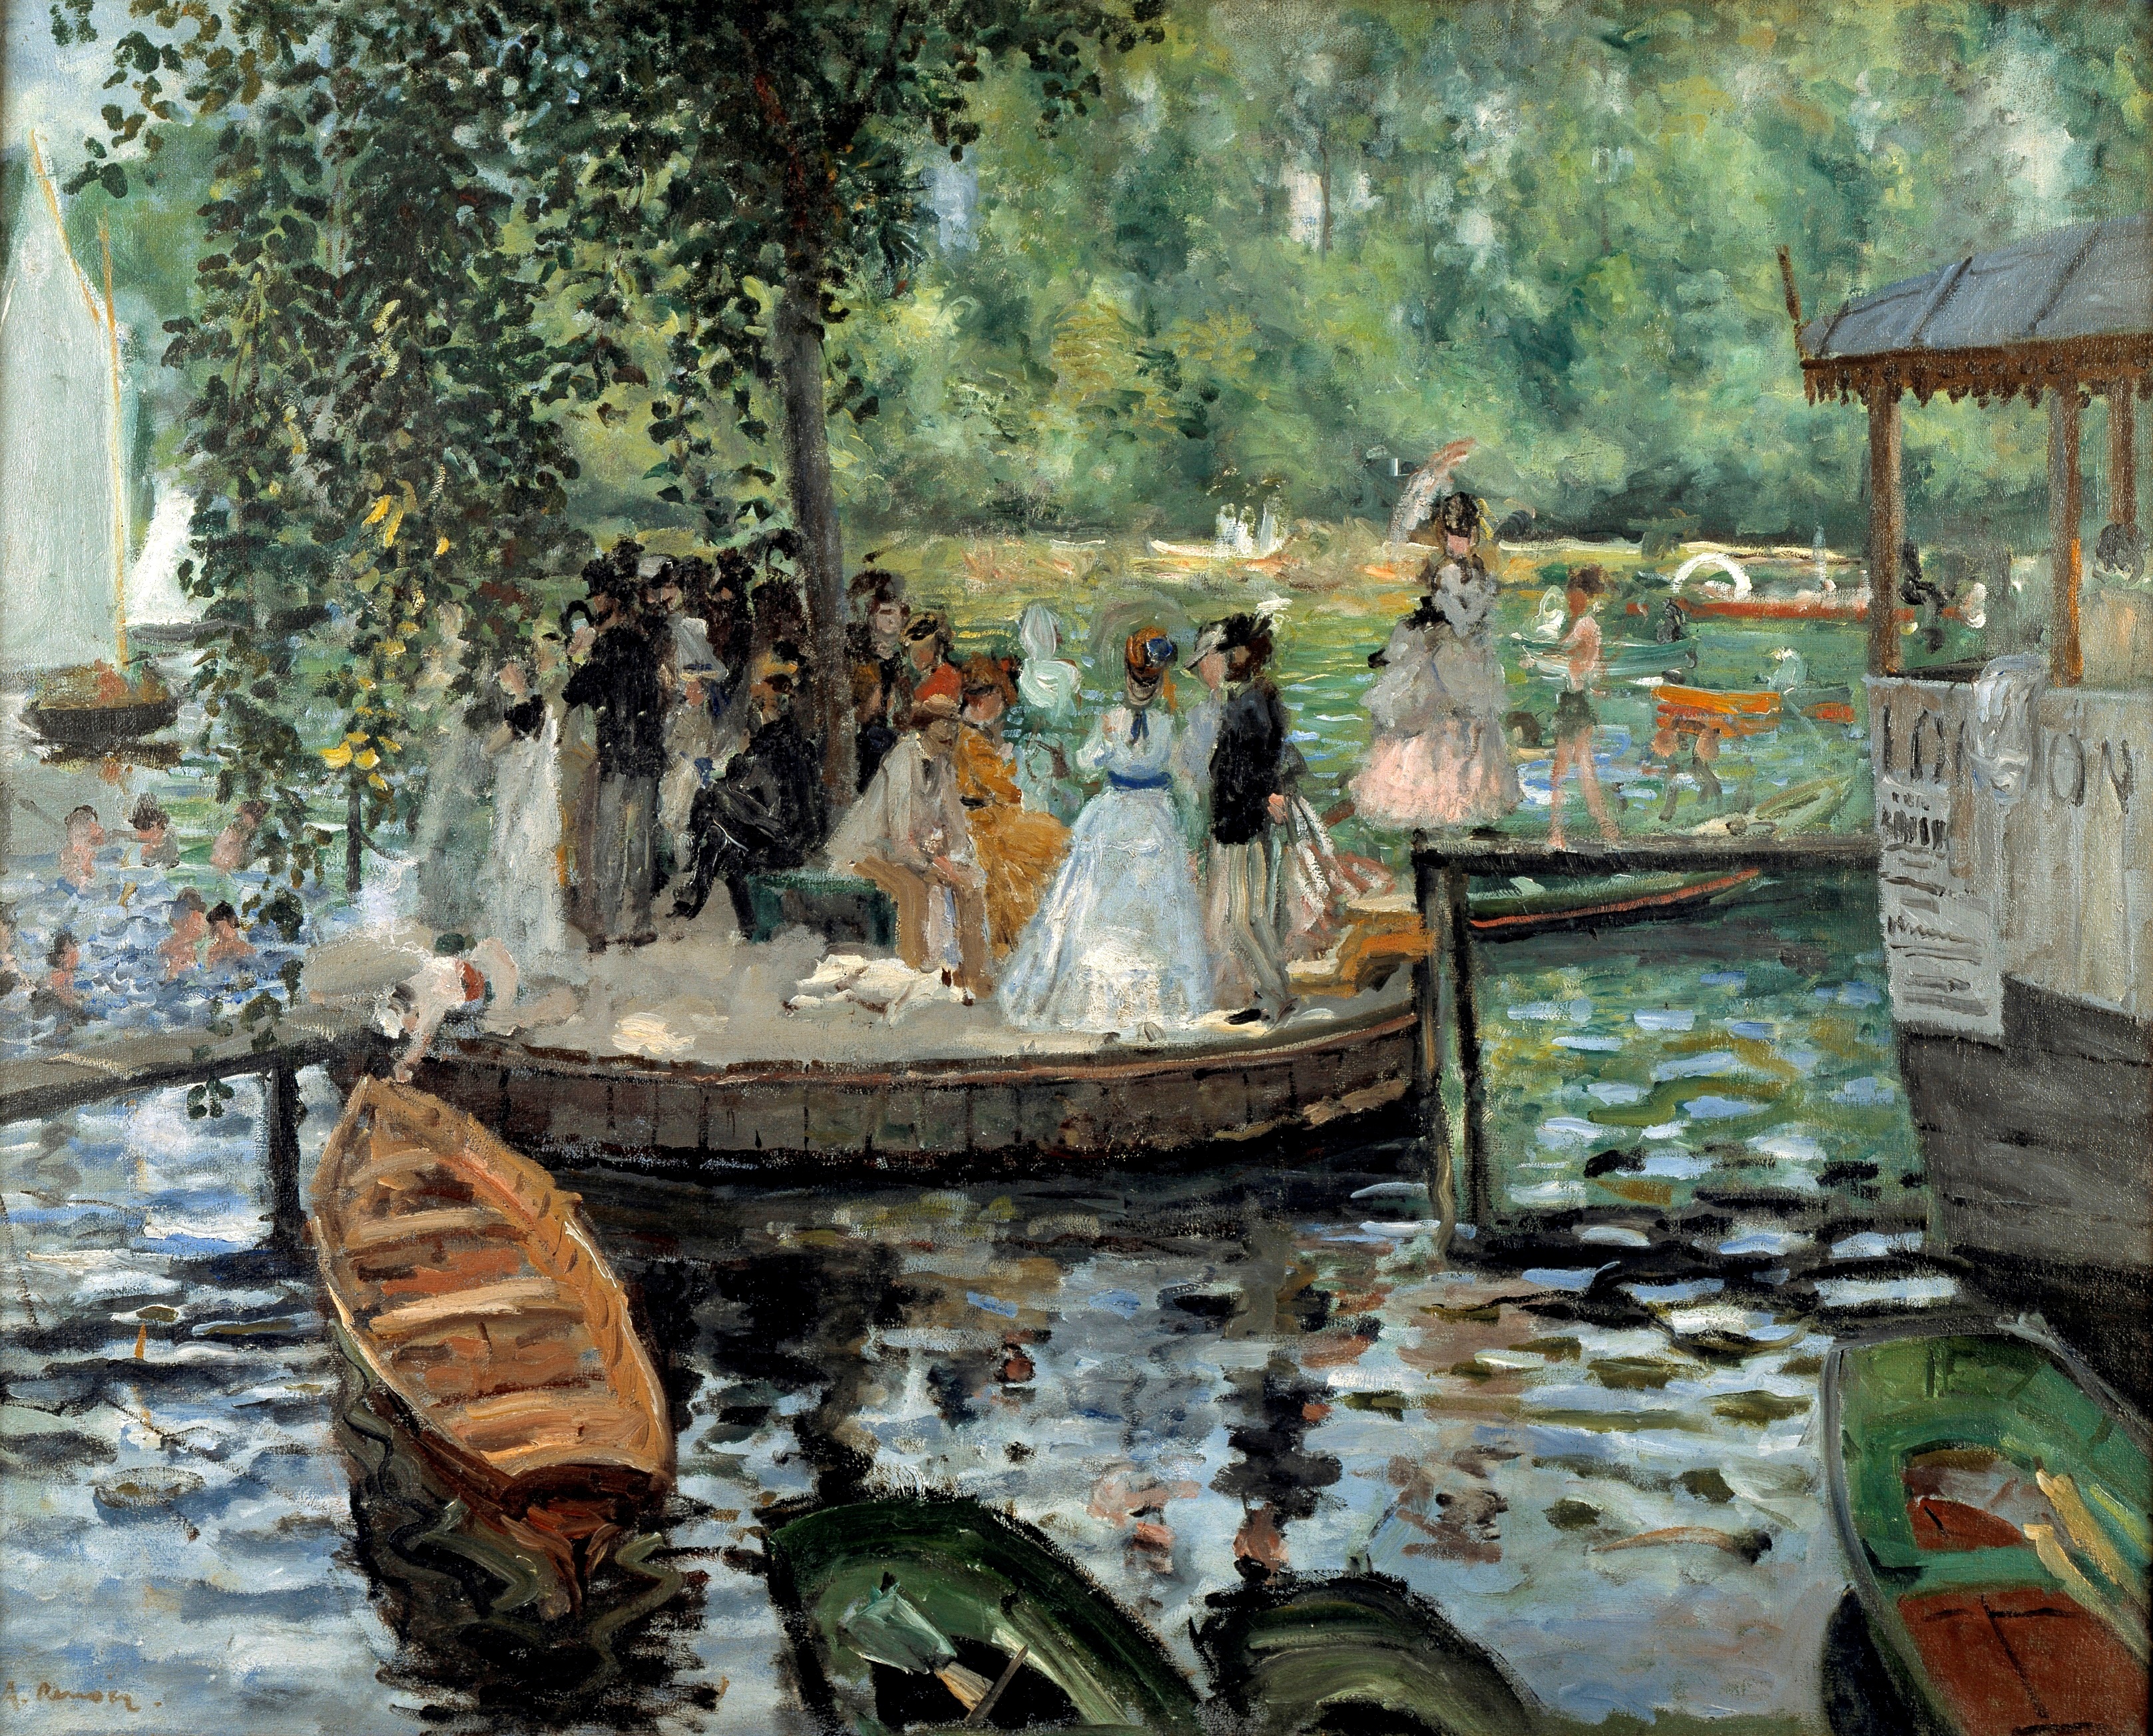 La Grenouillère by Pierre-Auguste Renoir - 1869 - 81,1 x 66,5 cm 